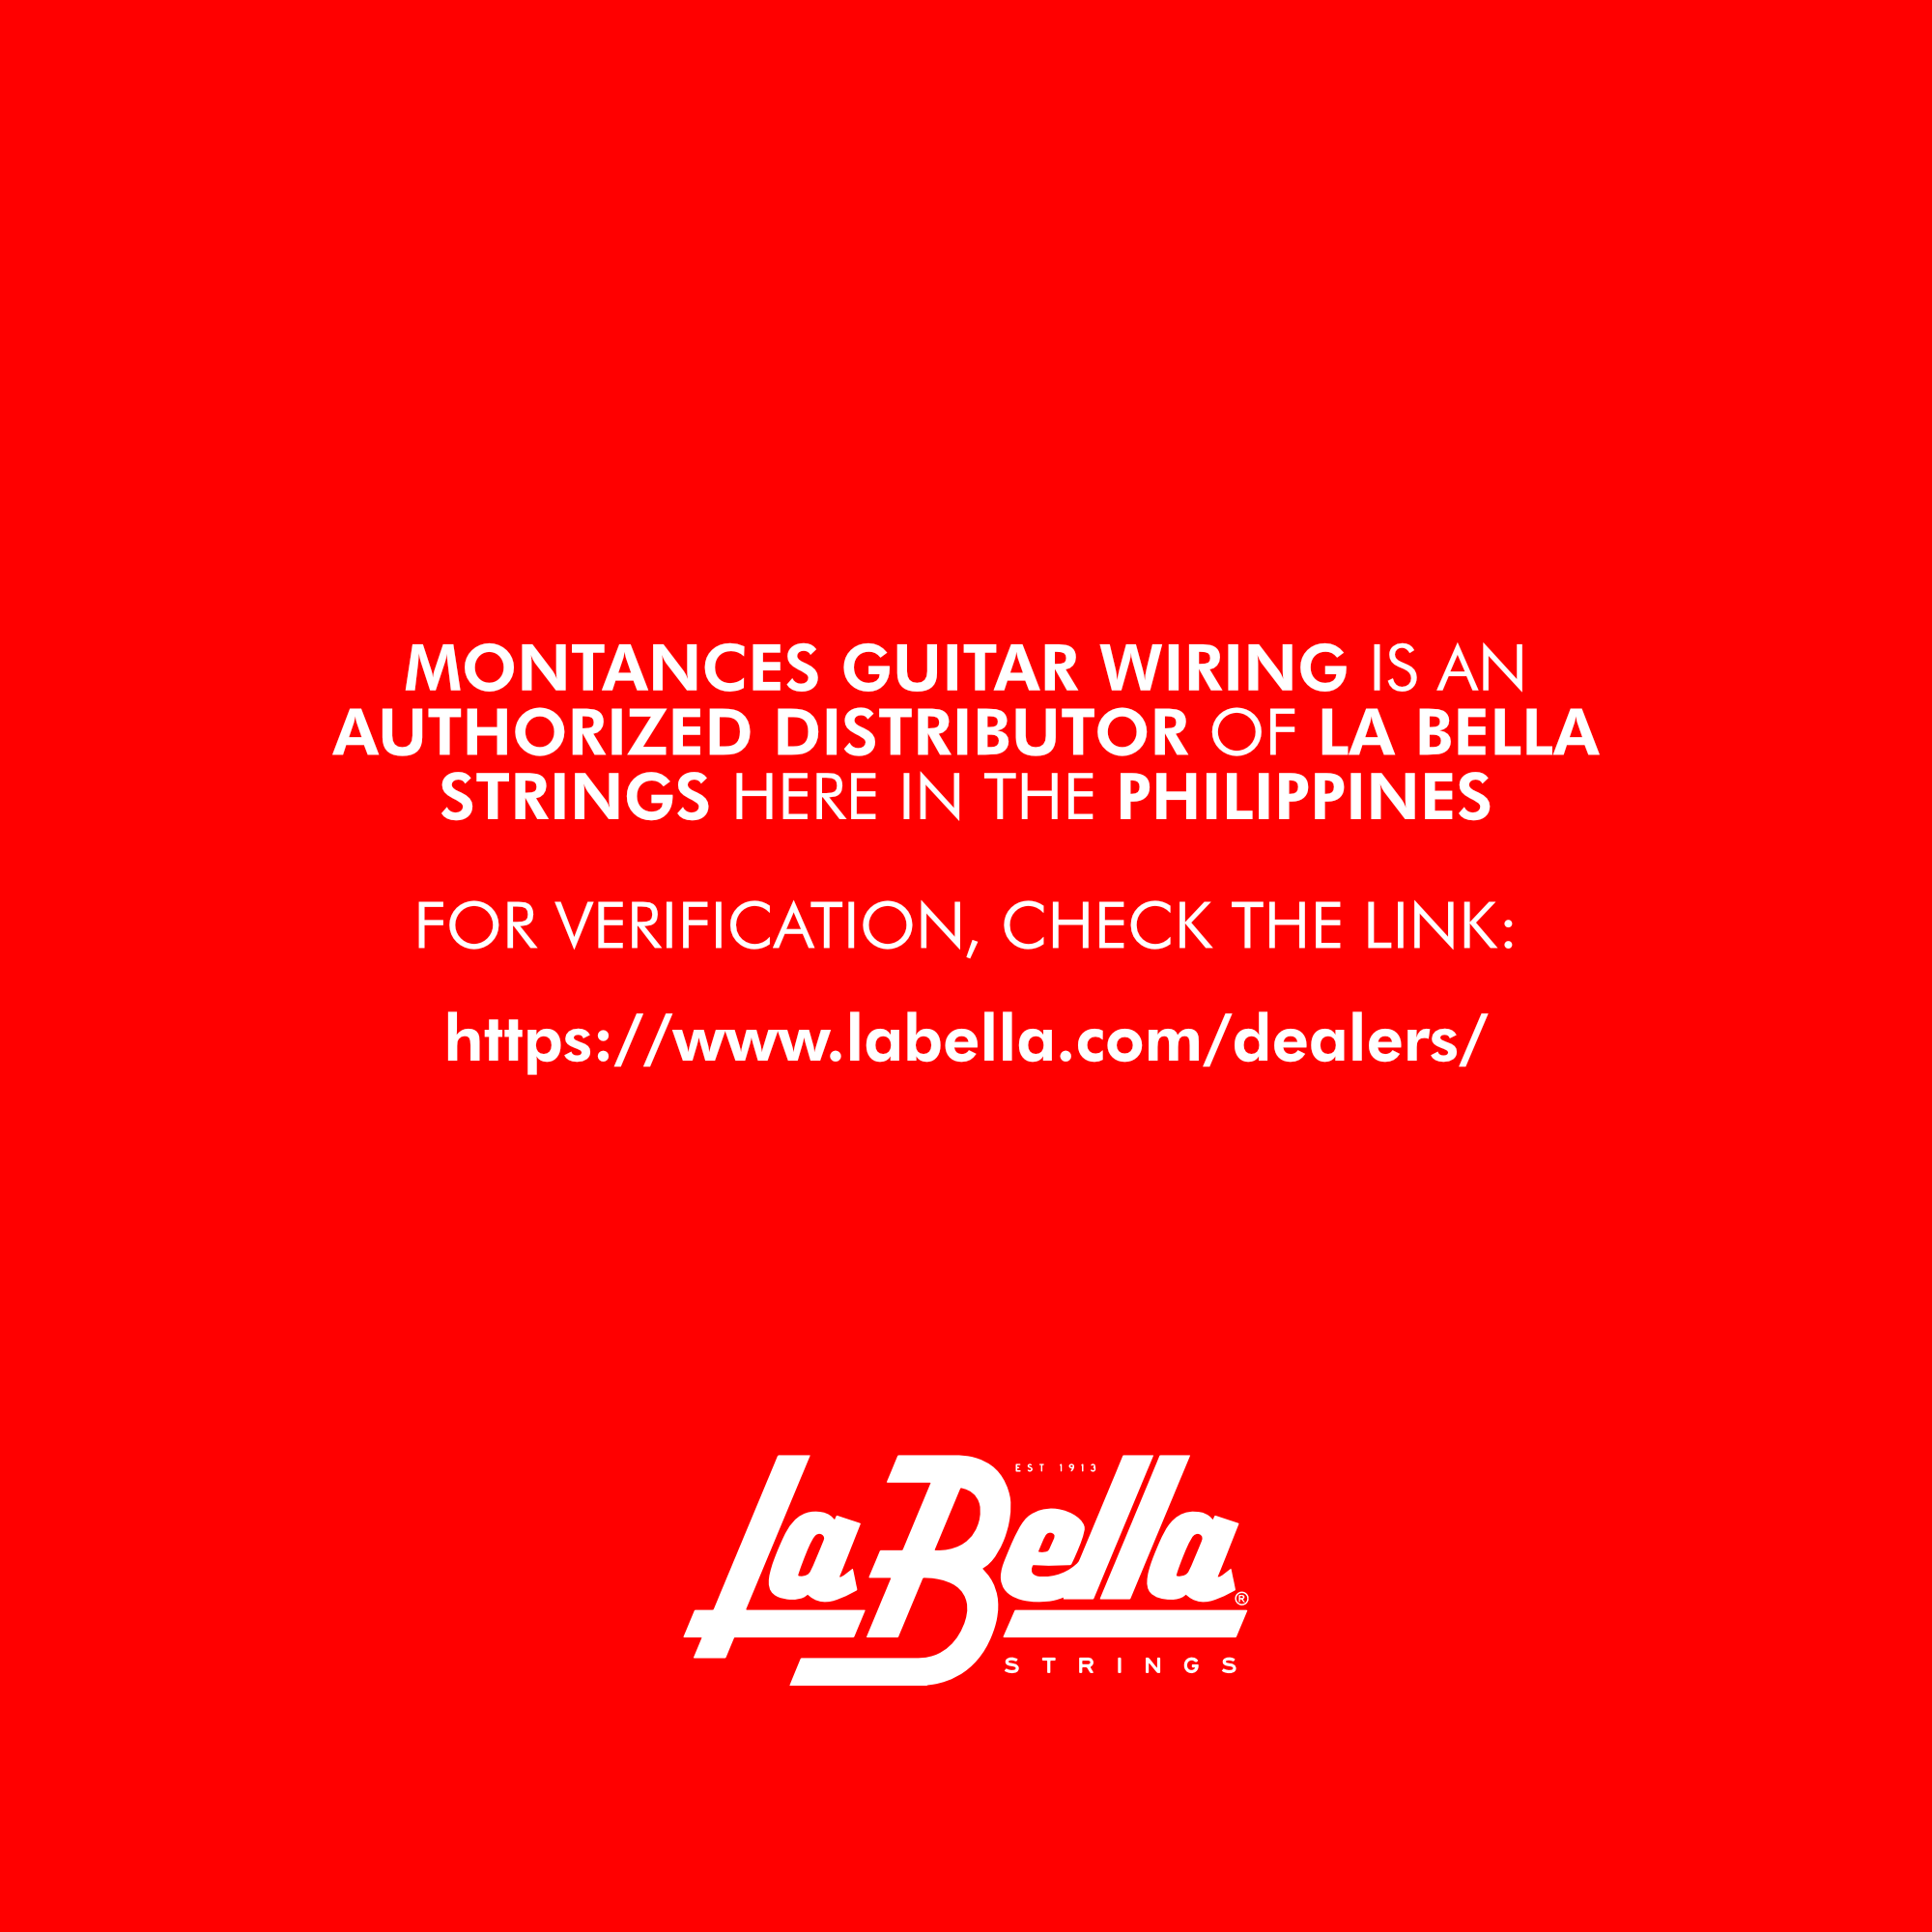 La Bella® RX-N4A Rx Nickel, 40-60-80-100 - Bass Guitar Strings